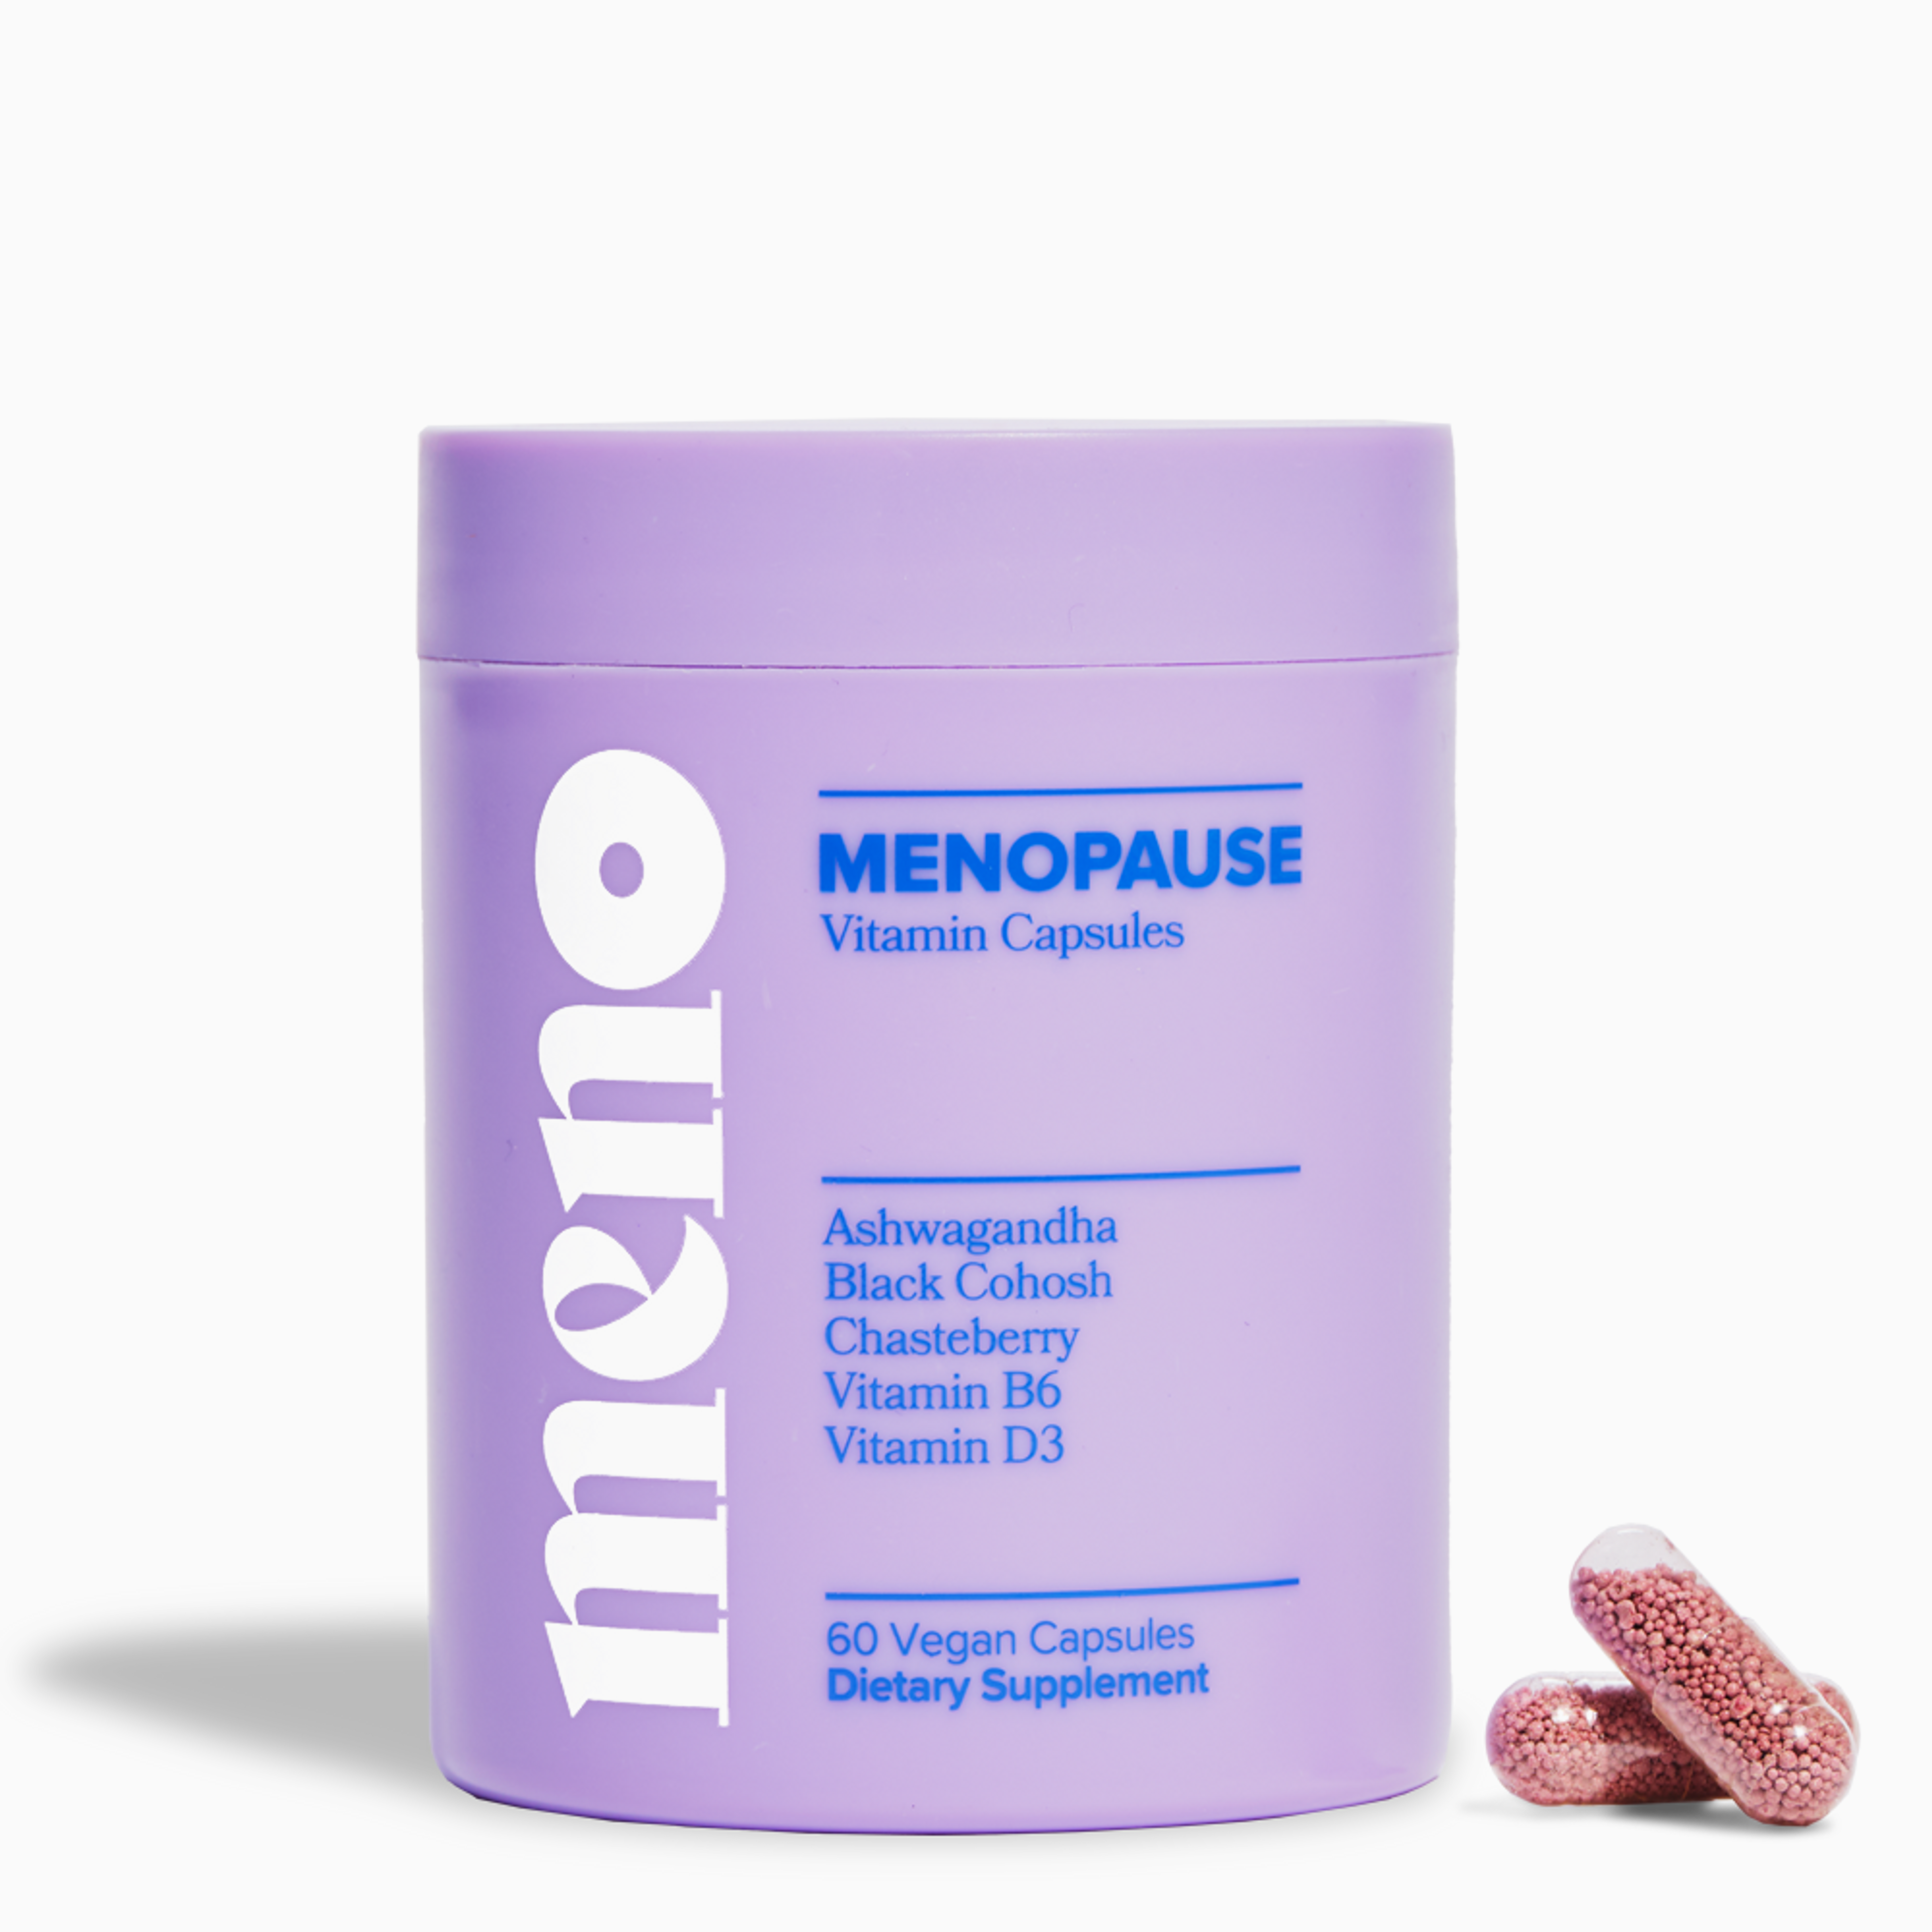 MENO - Menopause Vitamin Capsule